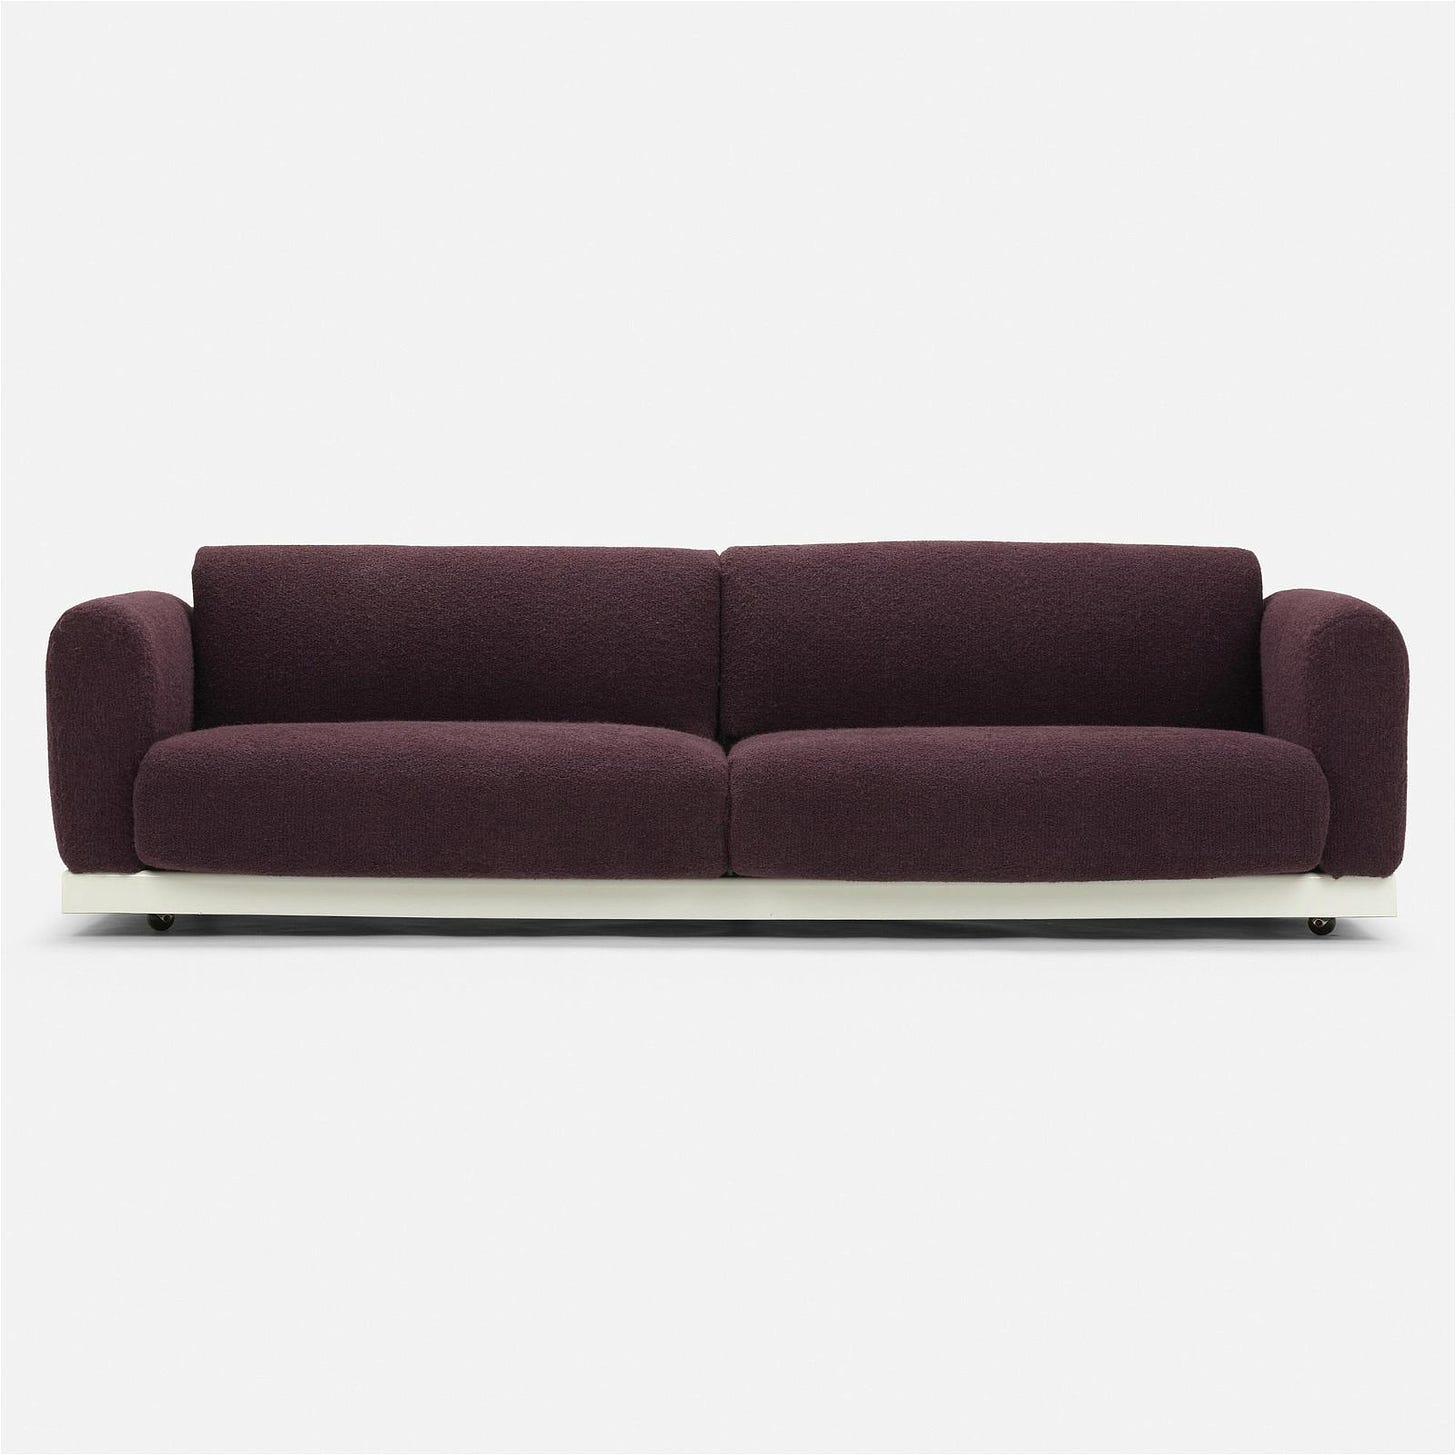 Cini Boeri, Gradual System sofa